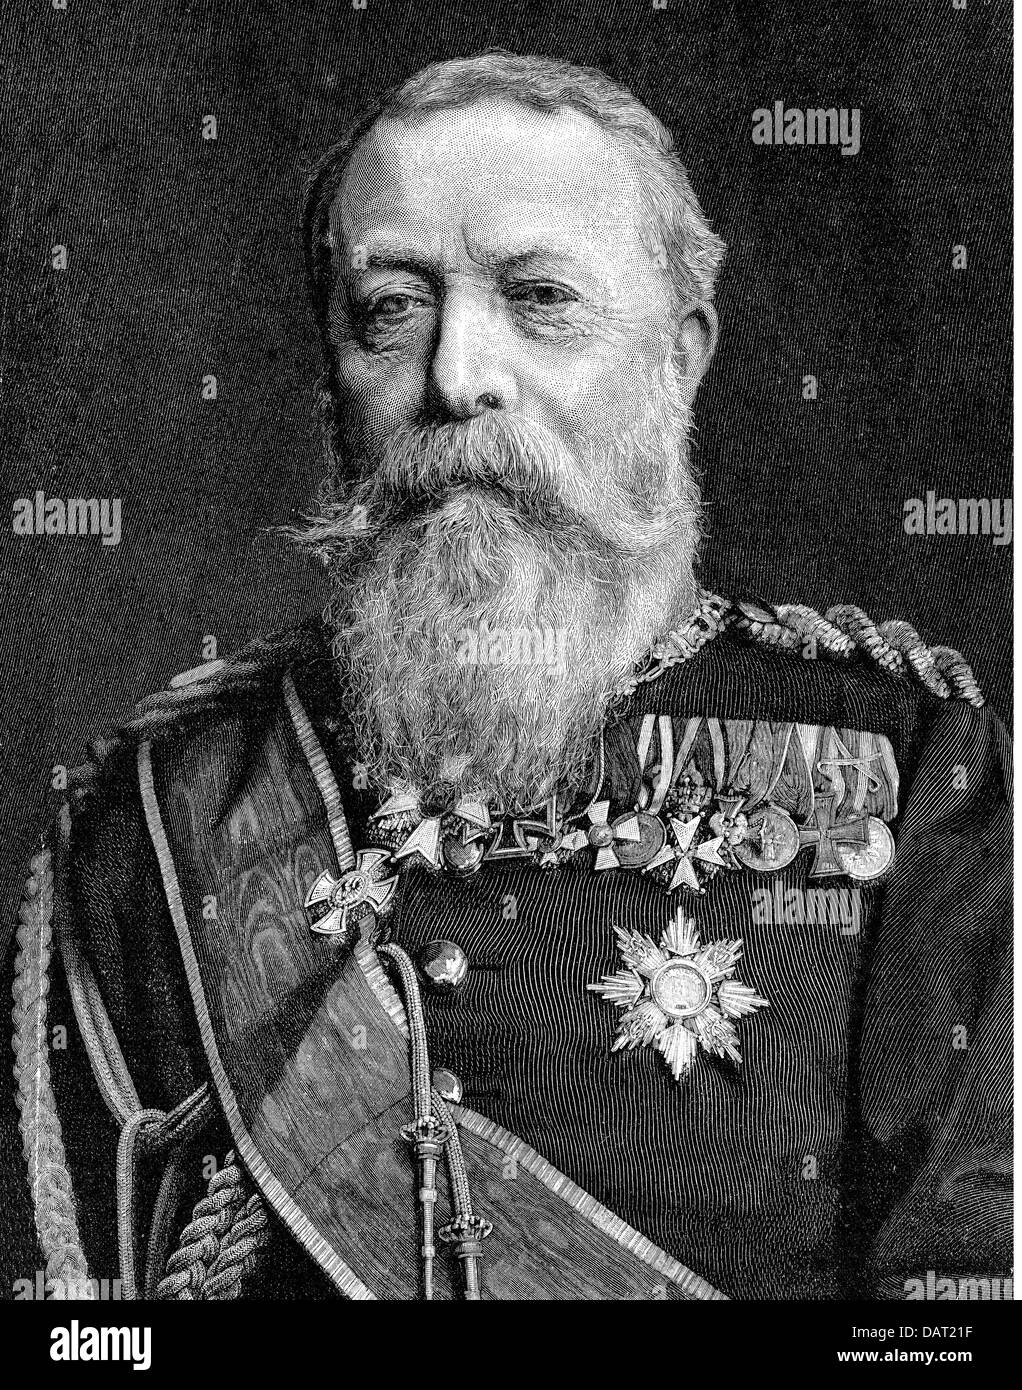 Frederick I, 9.9.1826 - 28.9.1907, Grand Duke of Baden 5.9.1856 - 28.9.1907, portrait, wood engraving, 1896, Stock Photo